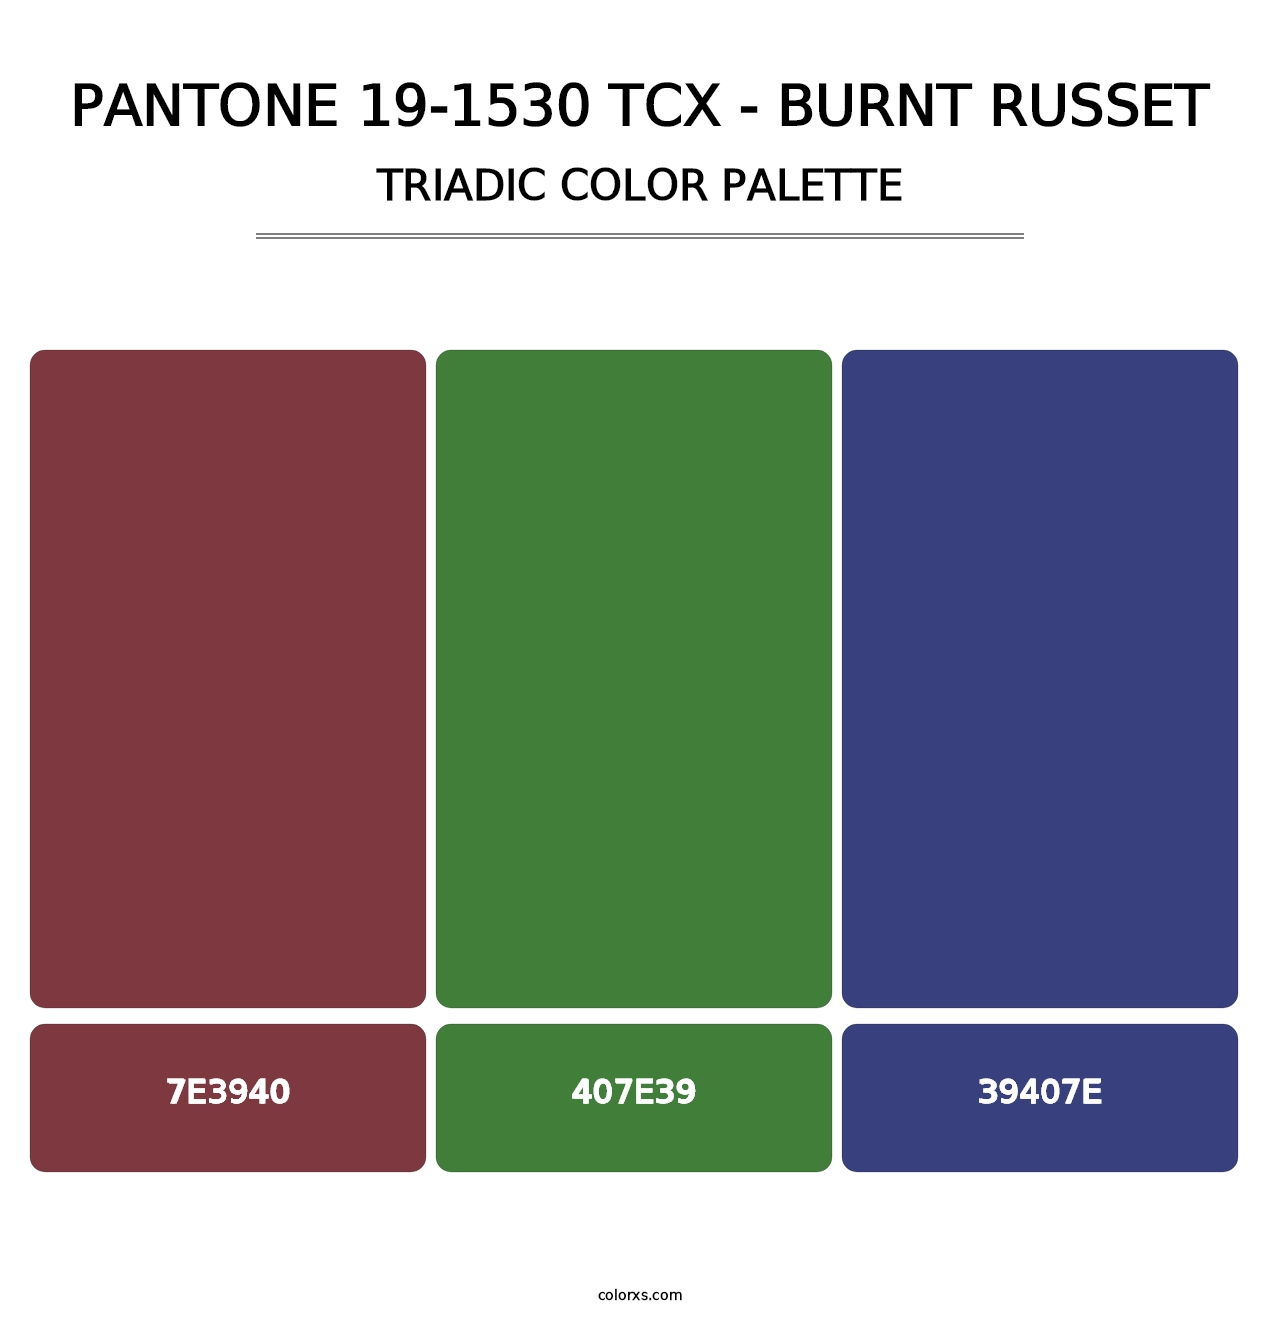 PANTONE 19-1530 TCX - Burnt Russet - Triadic Color Palette